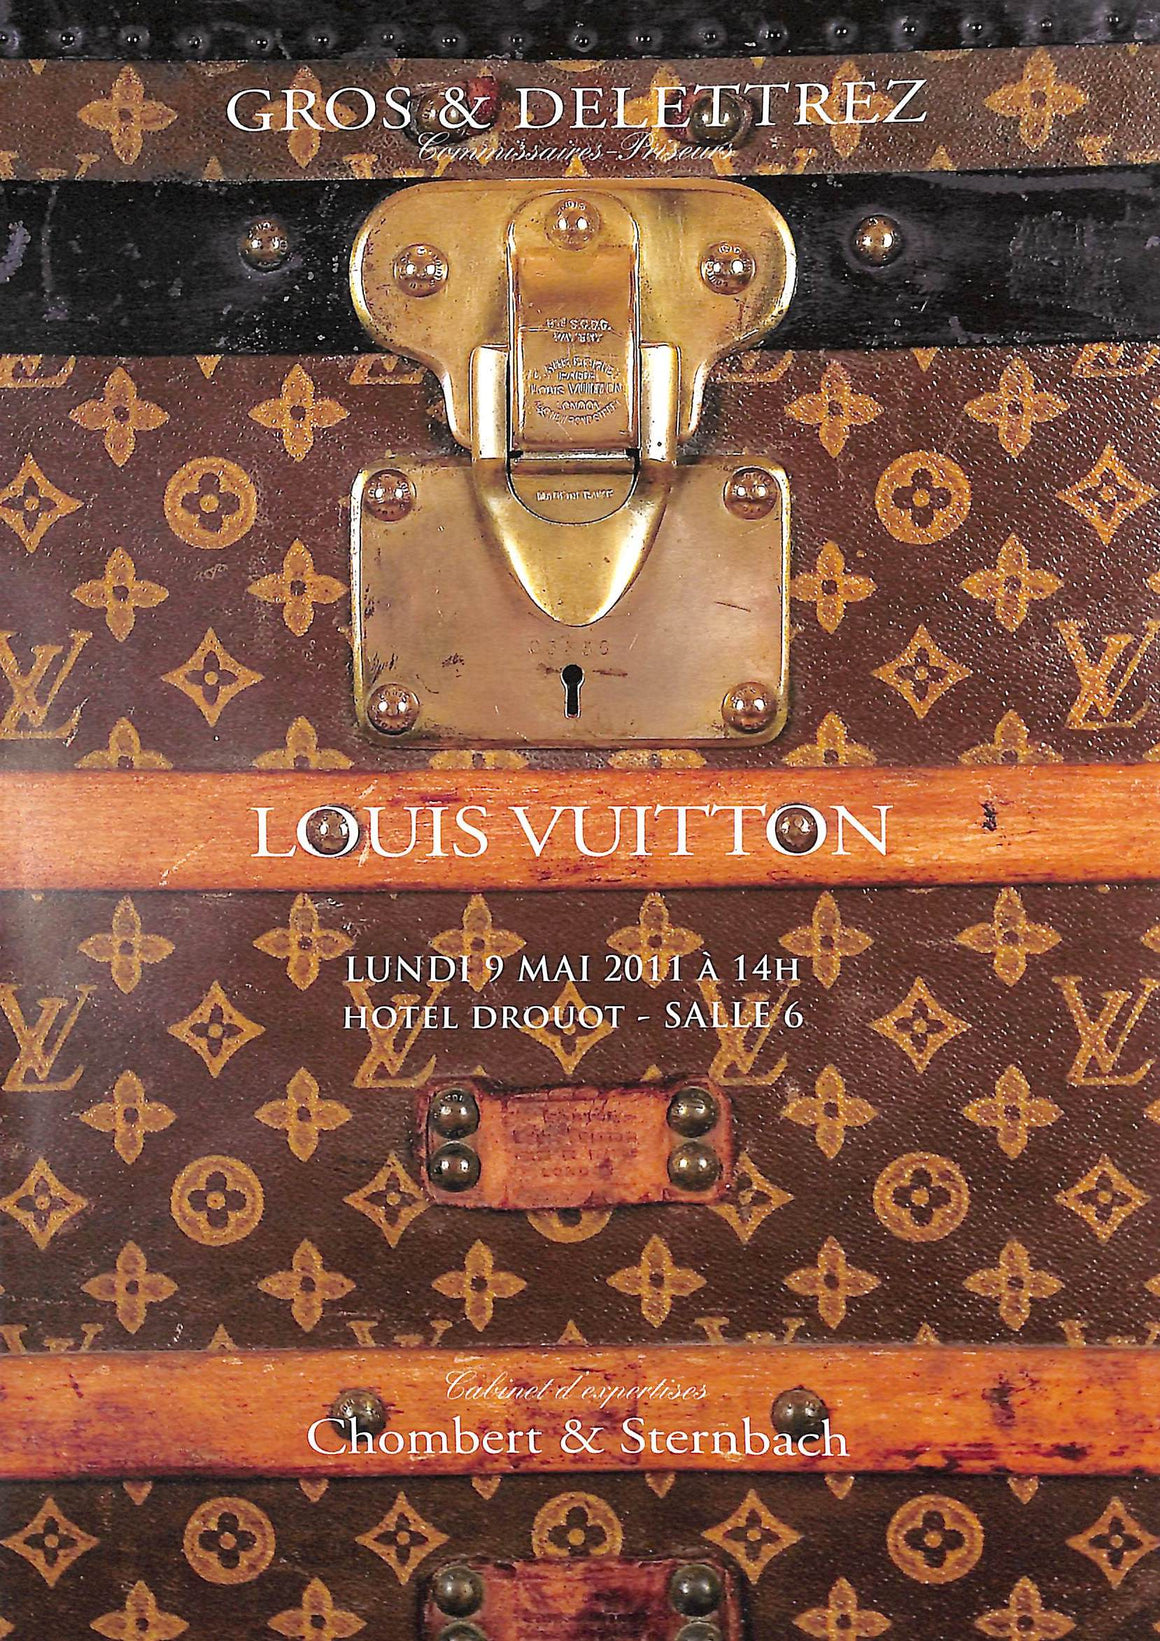 Sold at Auction: Louis Vuitton, Louis Vuitton Rare Limited Edition